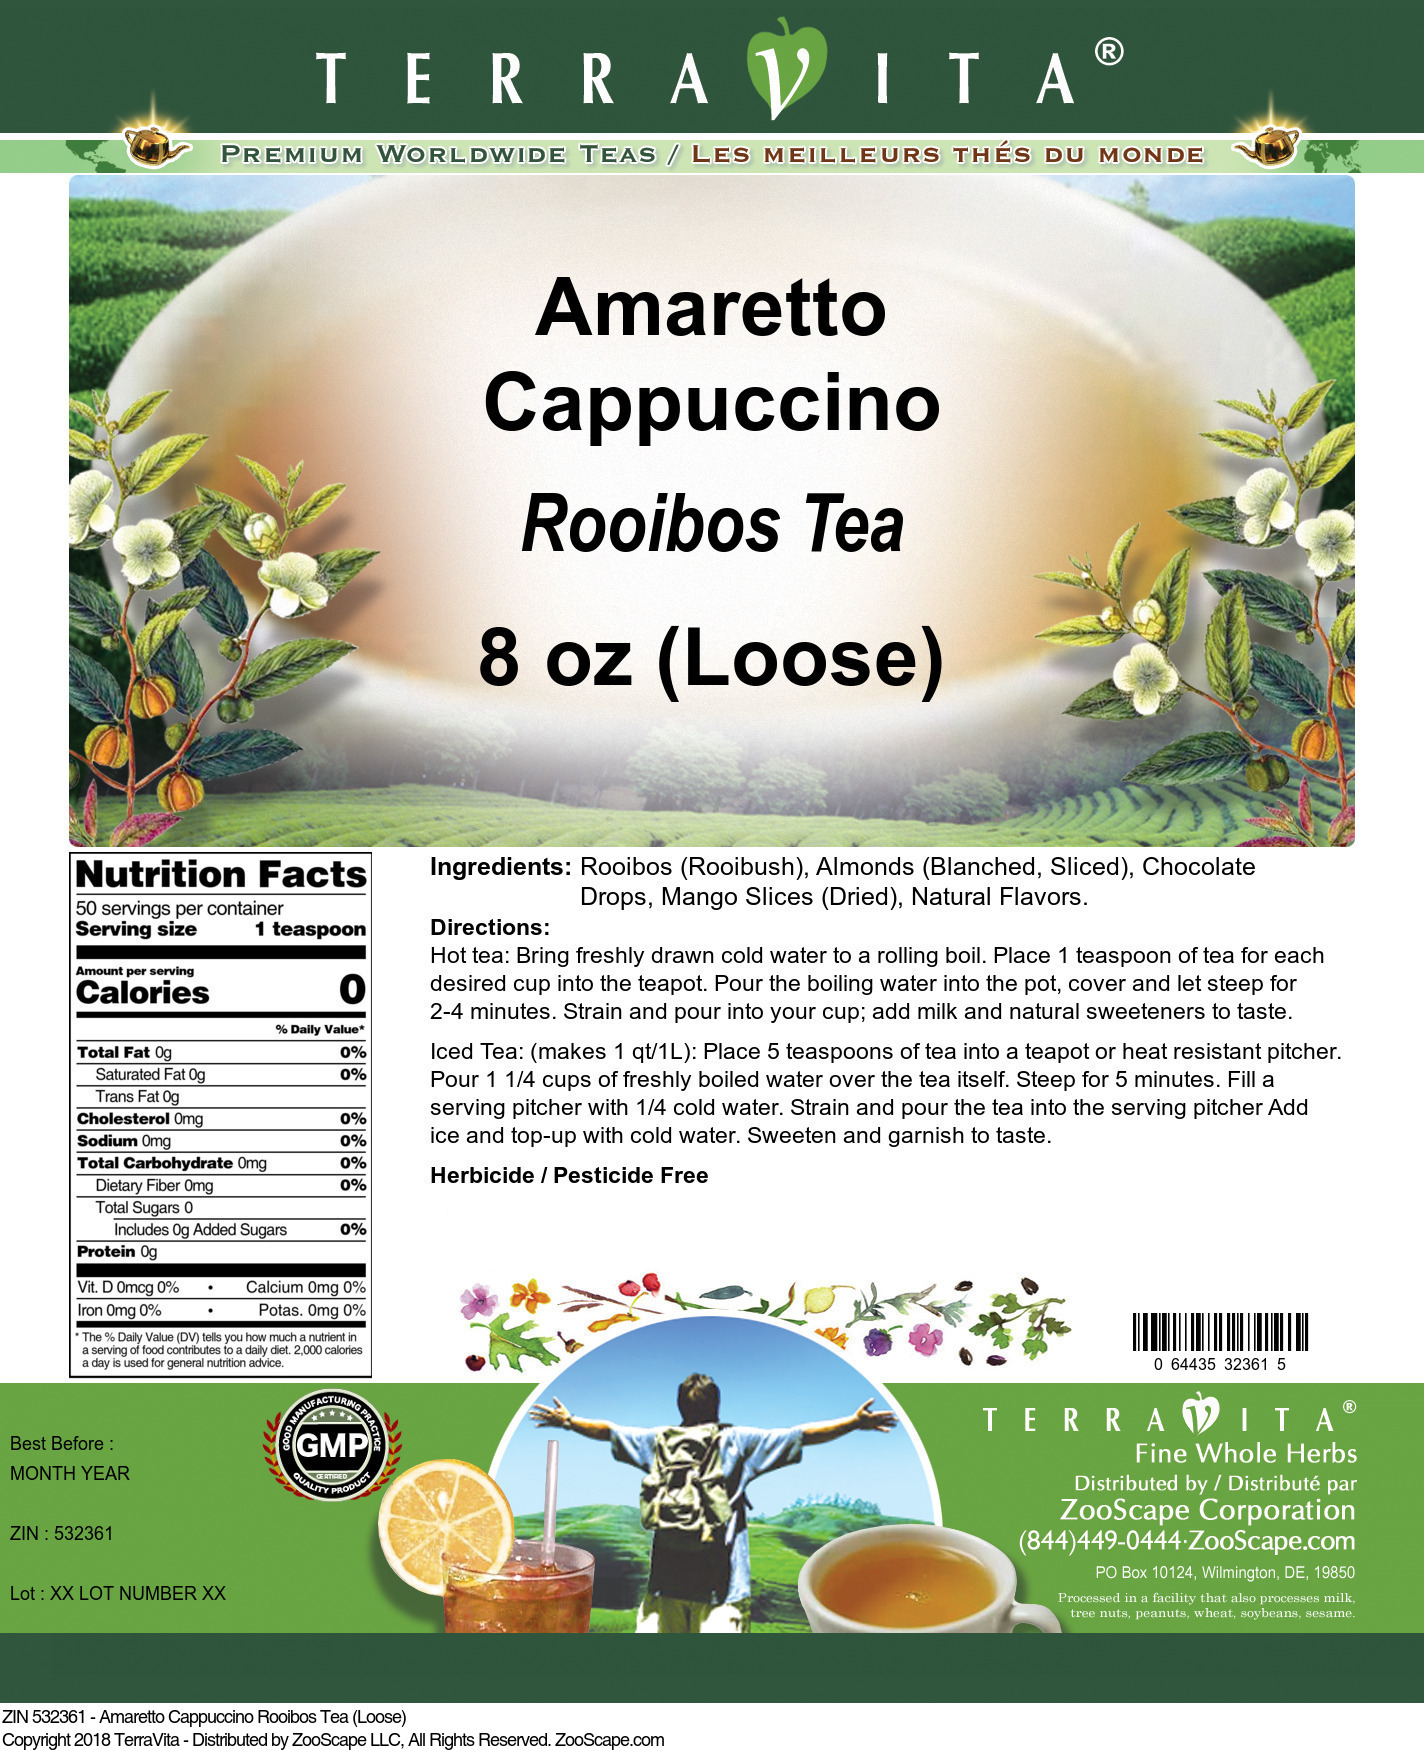 Amaretto Cappuccino Rooibos Tea (Loose) - Label